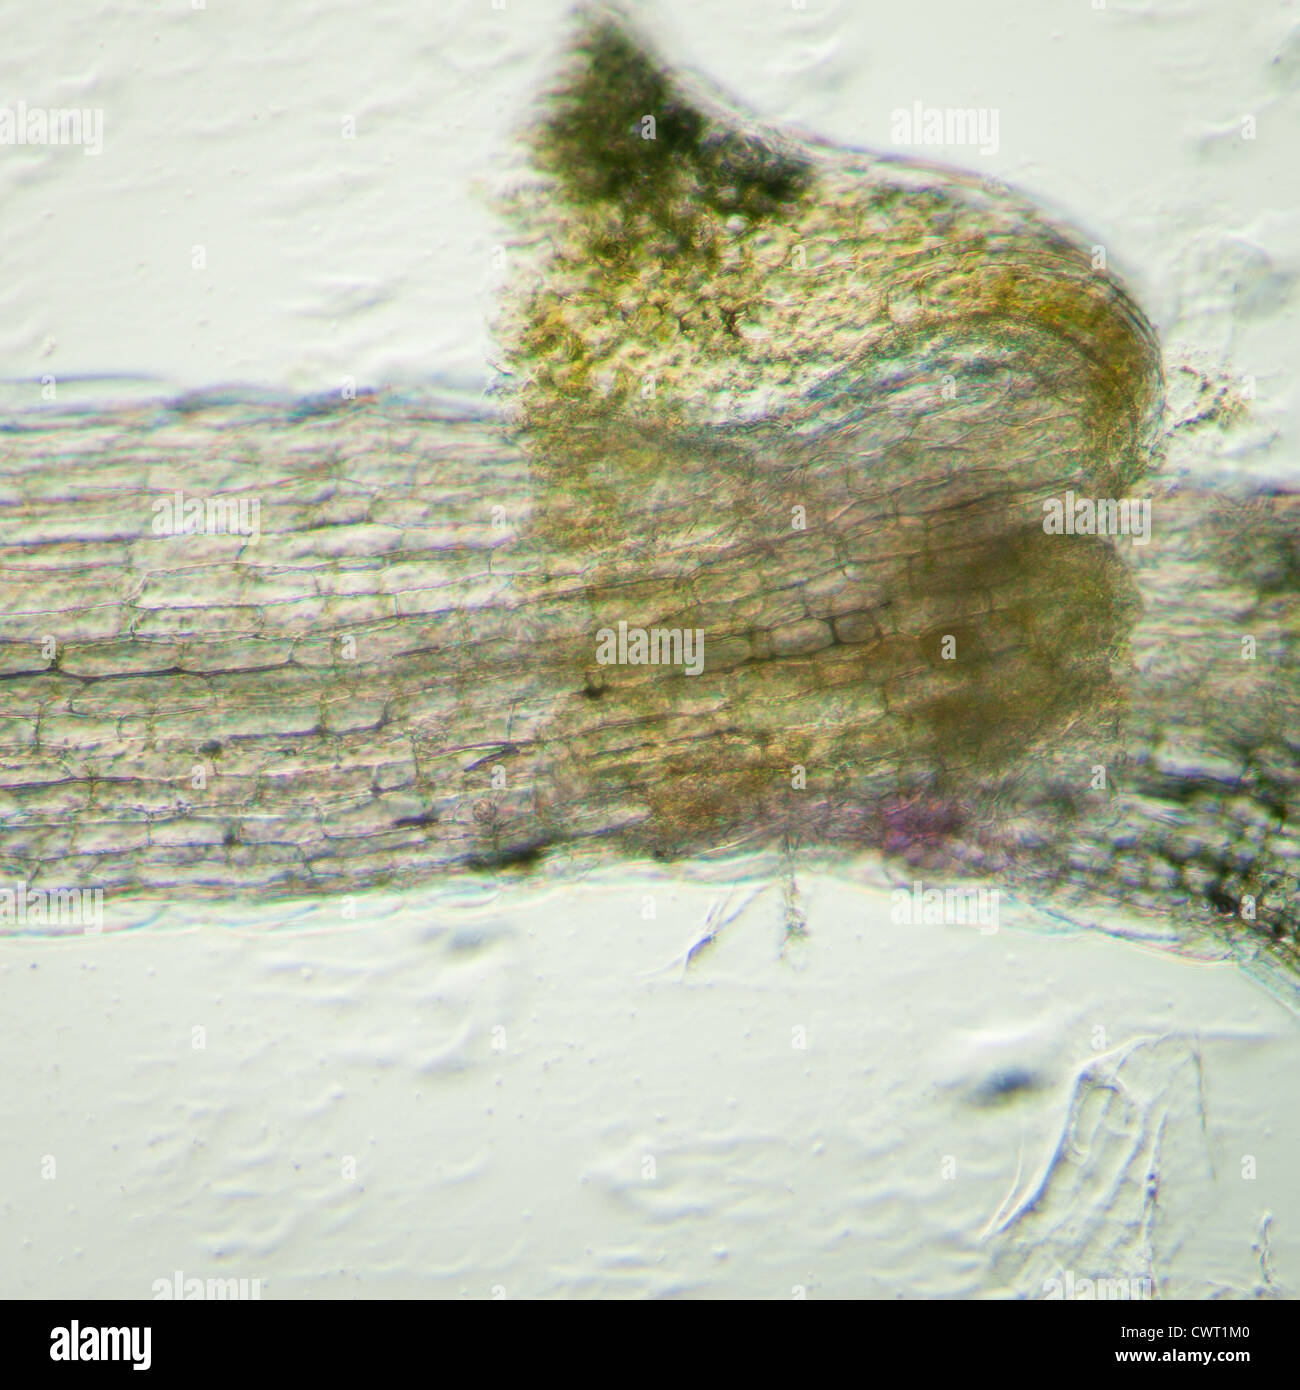 science botany micrograph plant arabidopsis thaliana root tissue micro Stock Photo